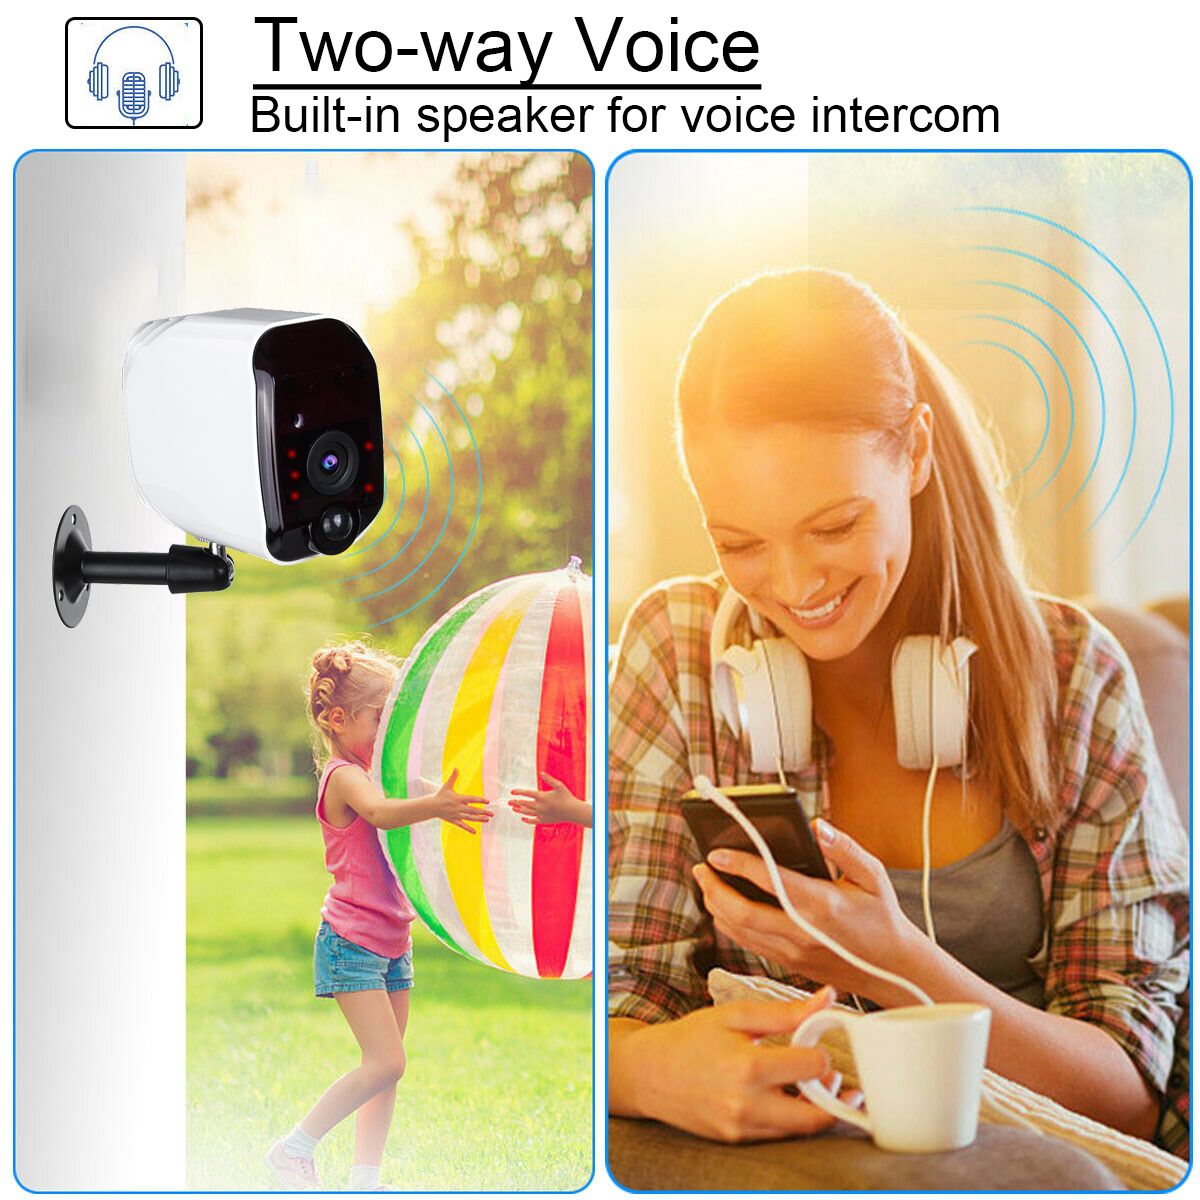 320deg-HD-1080P-WIFI-IP-Camera-Outdoor-CCTV-Home-Security-IR-Camera-PTZ-Control-ONVIF-1560916